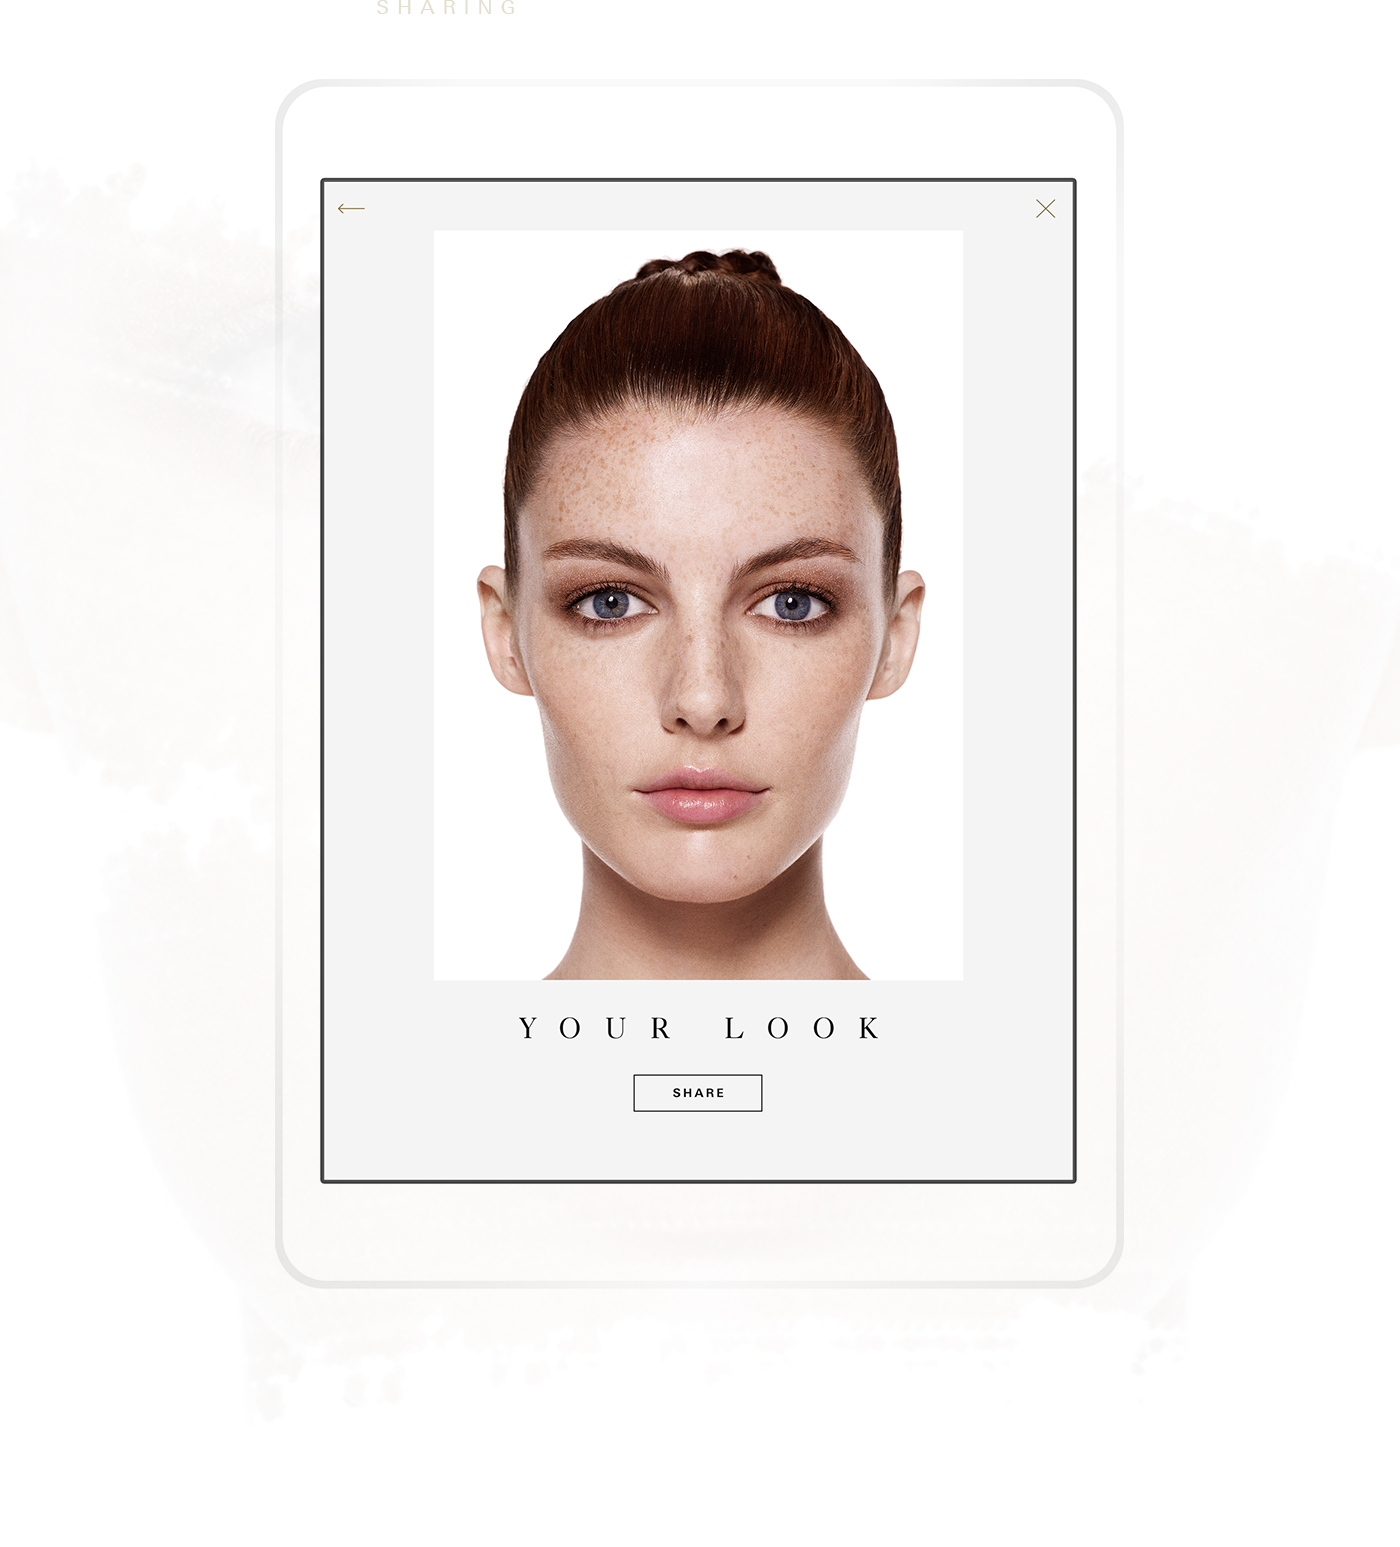 Harrods makeup make-up interactive studio app tablet beauty lips eyes chanel ysl Dior model face